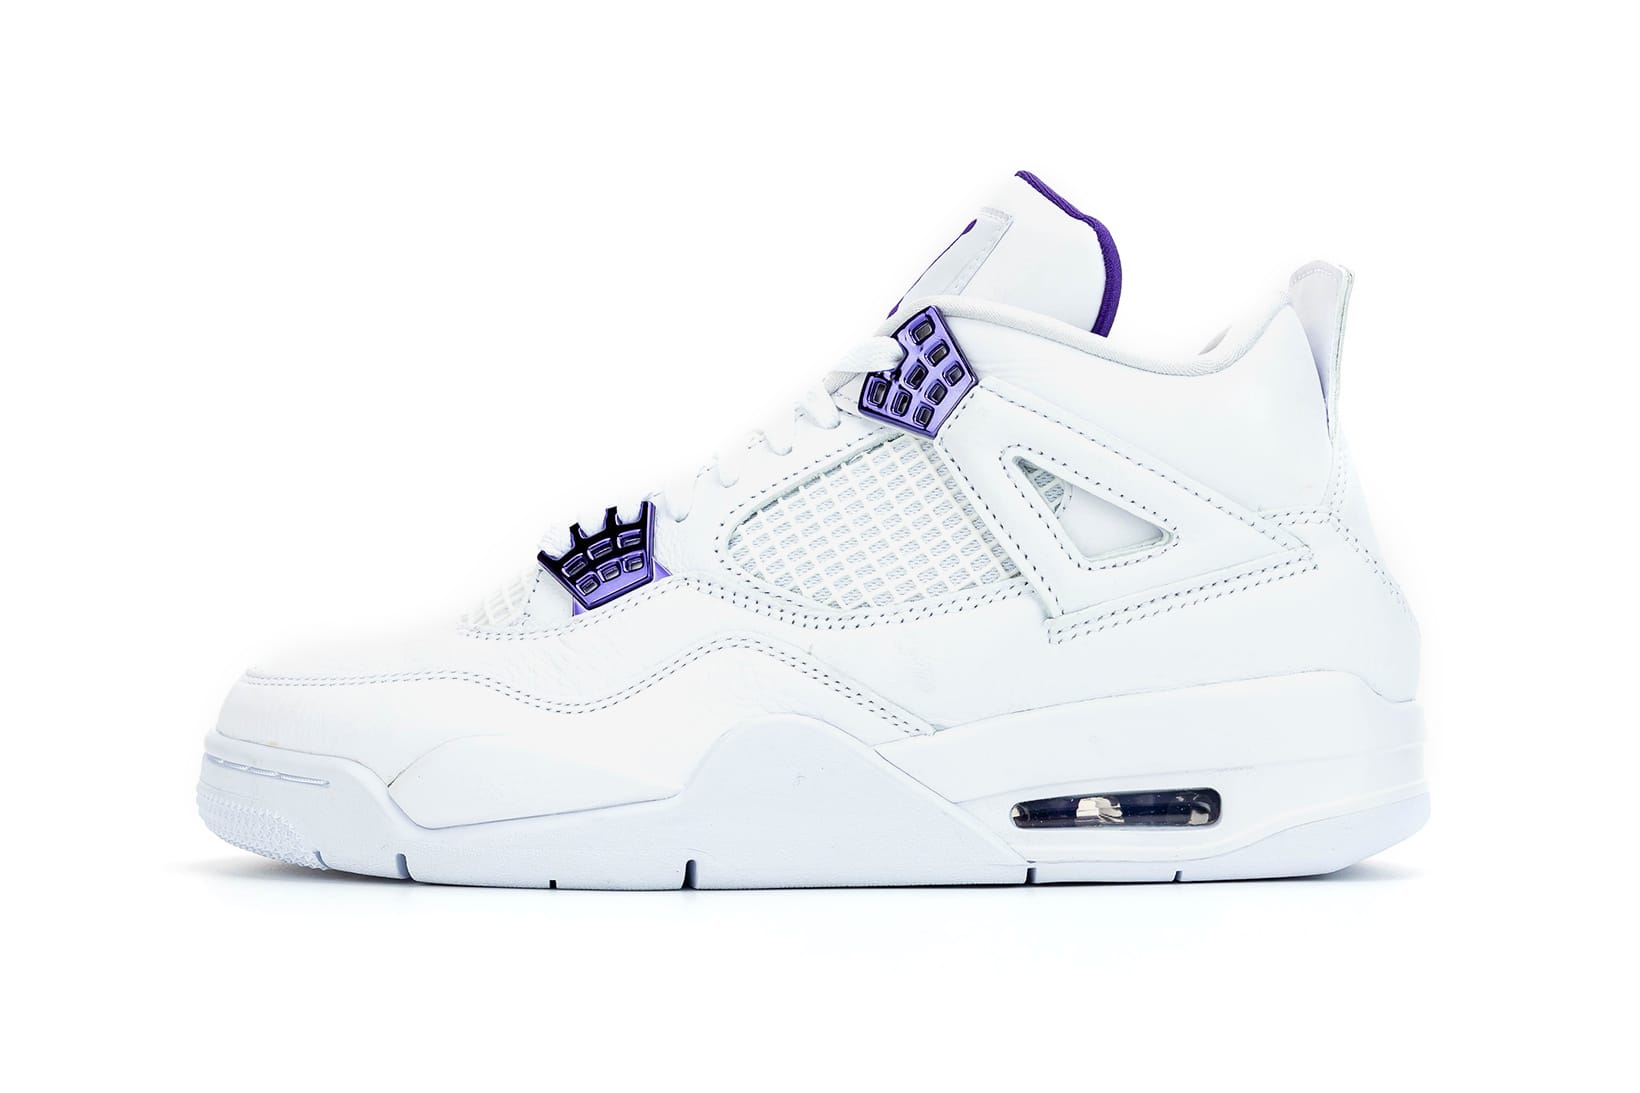 White/Purple Air Jordan 4 Release Date 